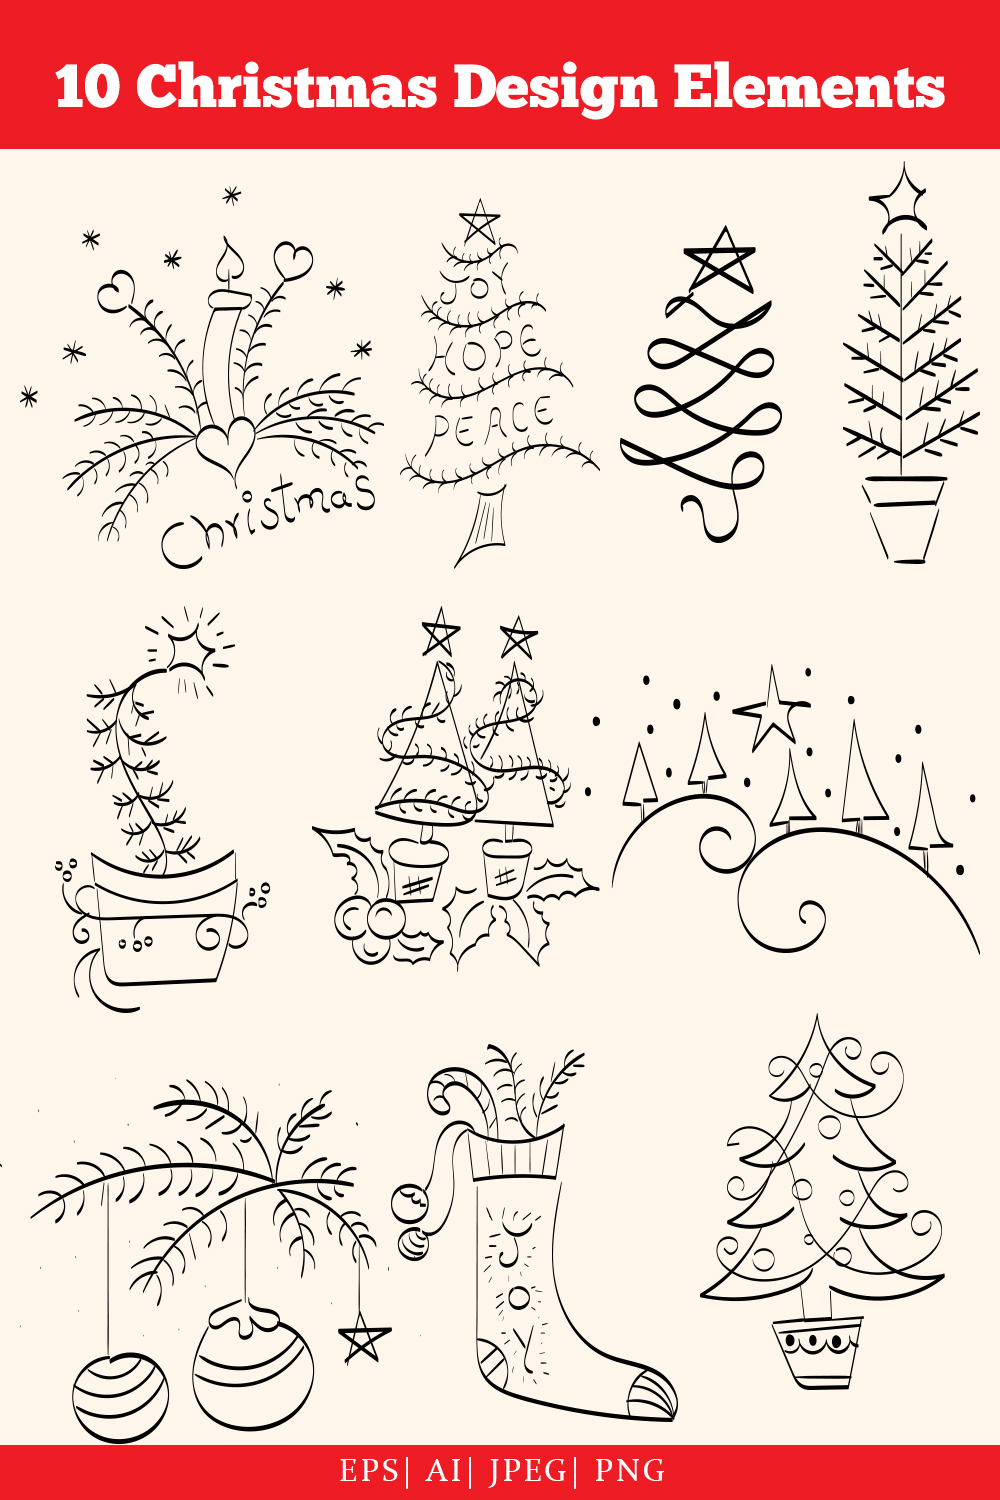 10 Christmas Design Elements - pinterest image preview.